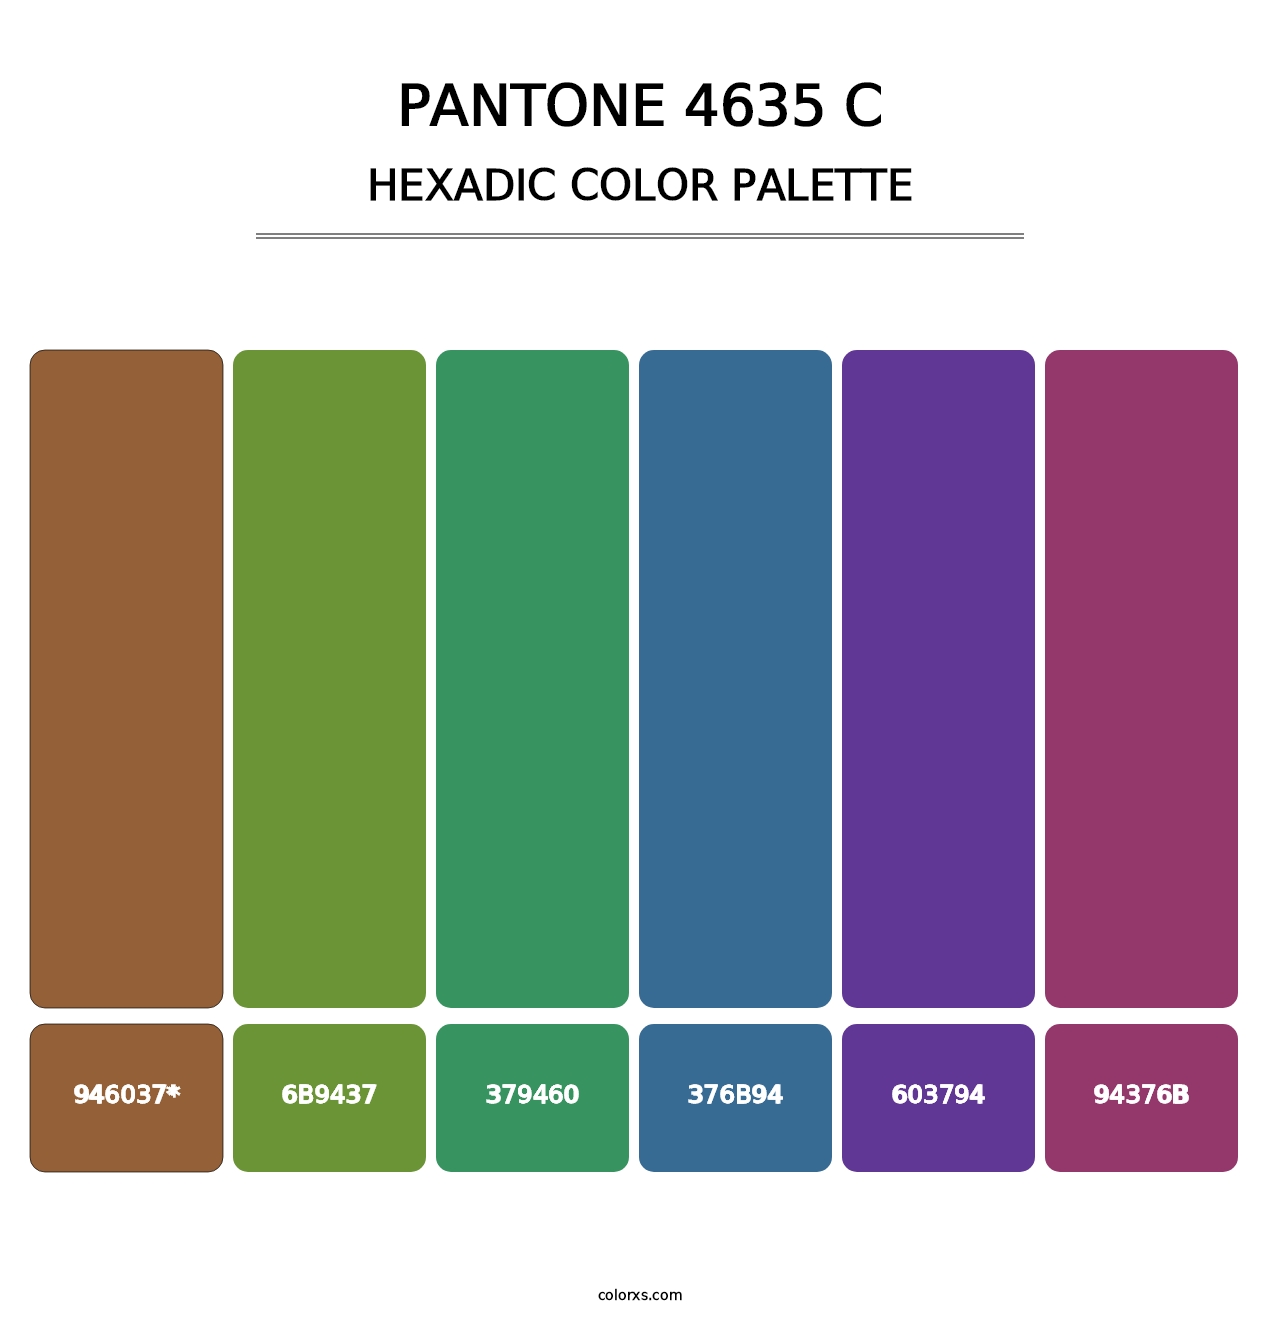 PANTONE 4635 C - Hexadic Color Palette